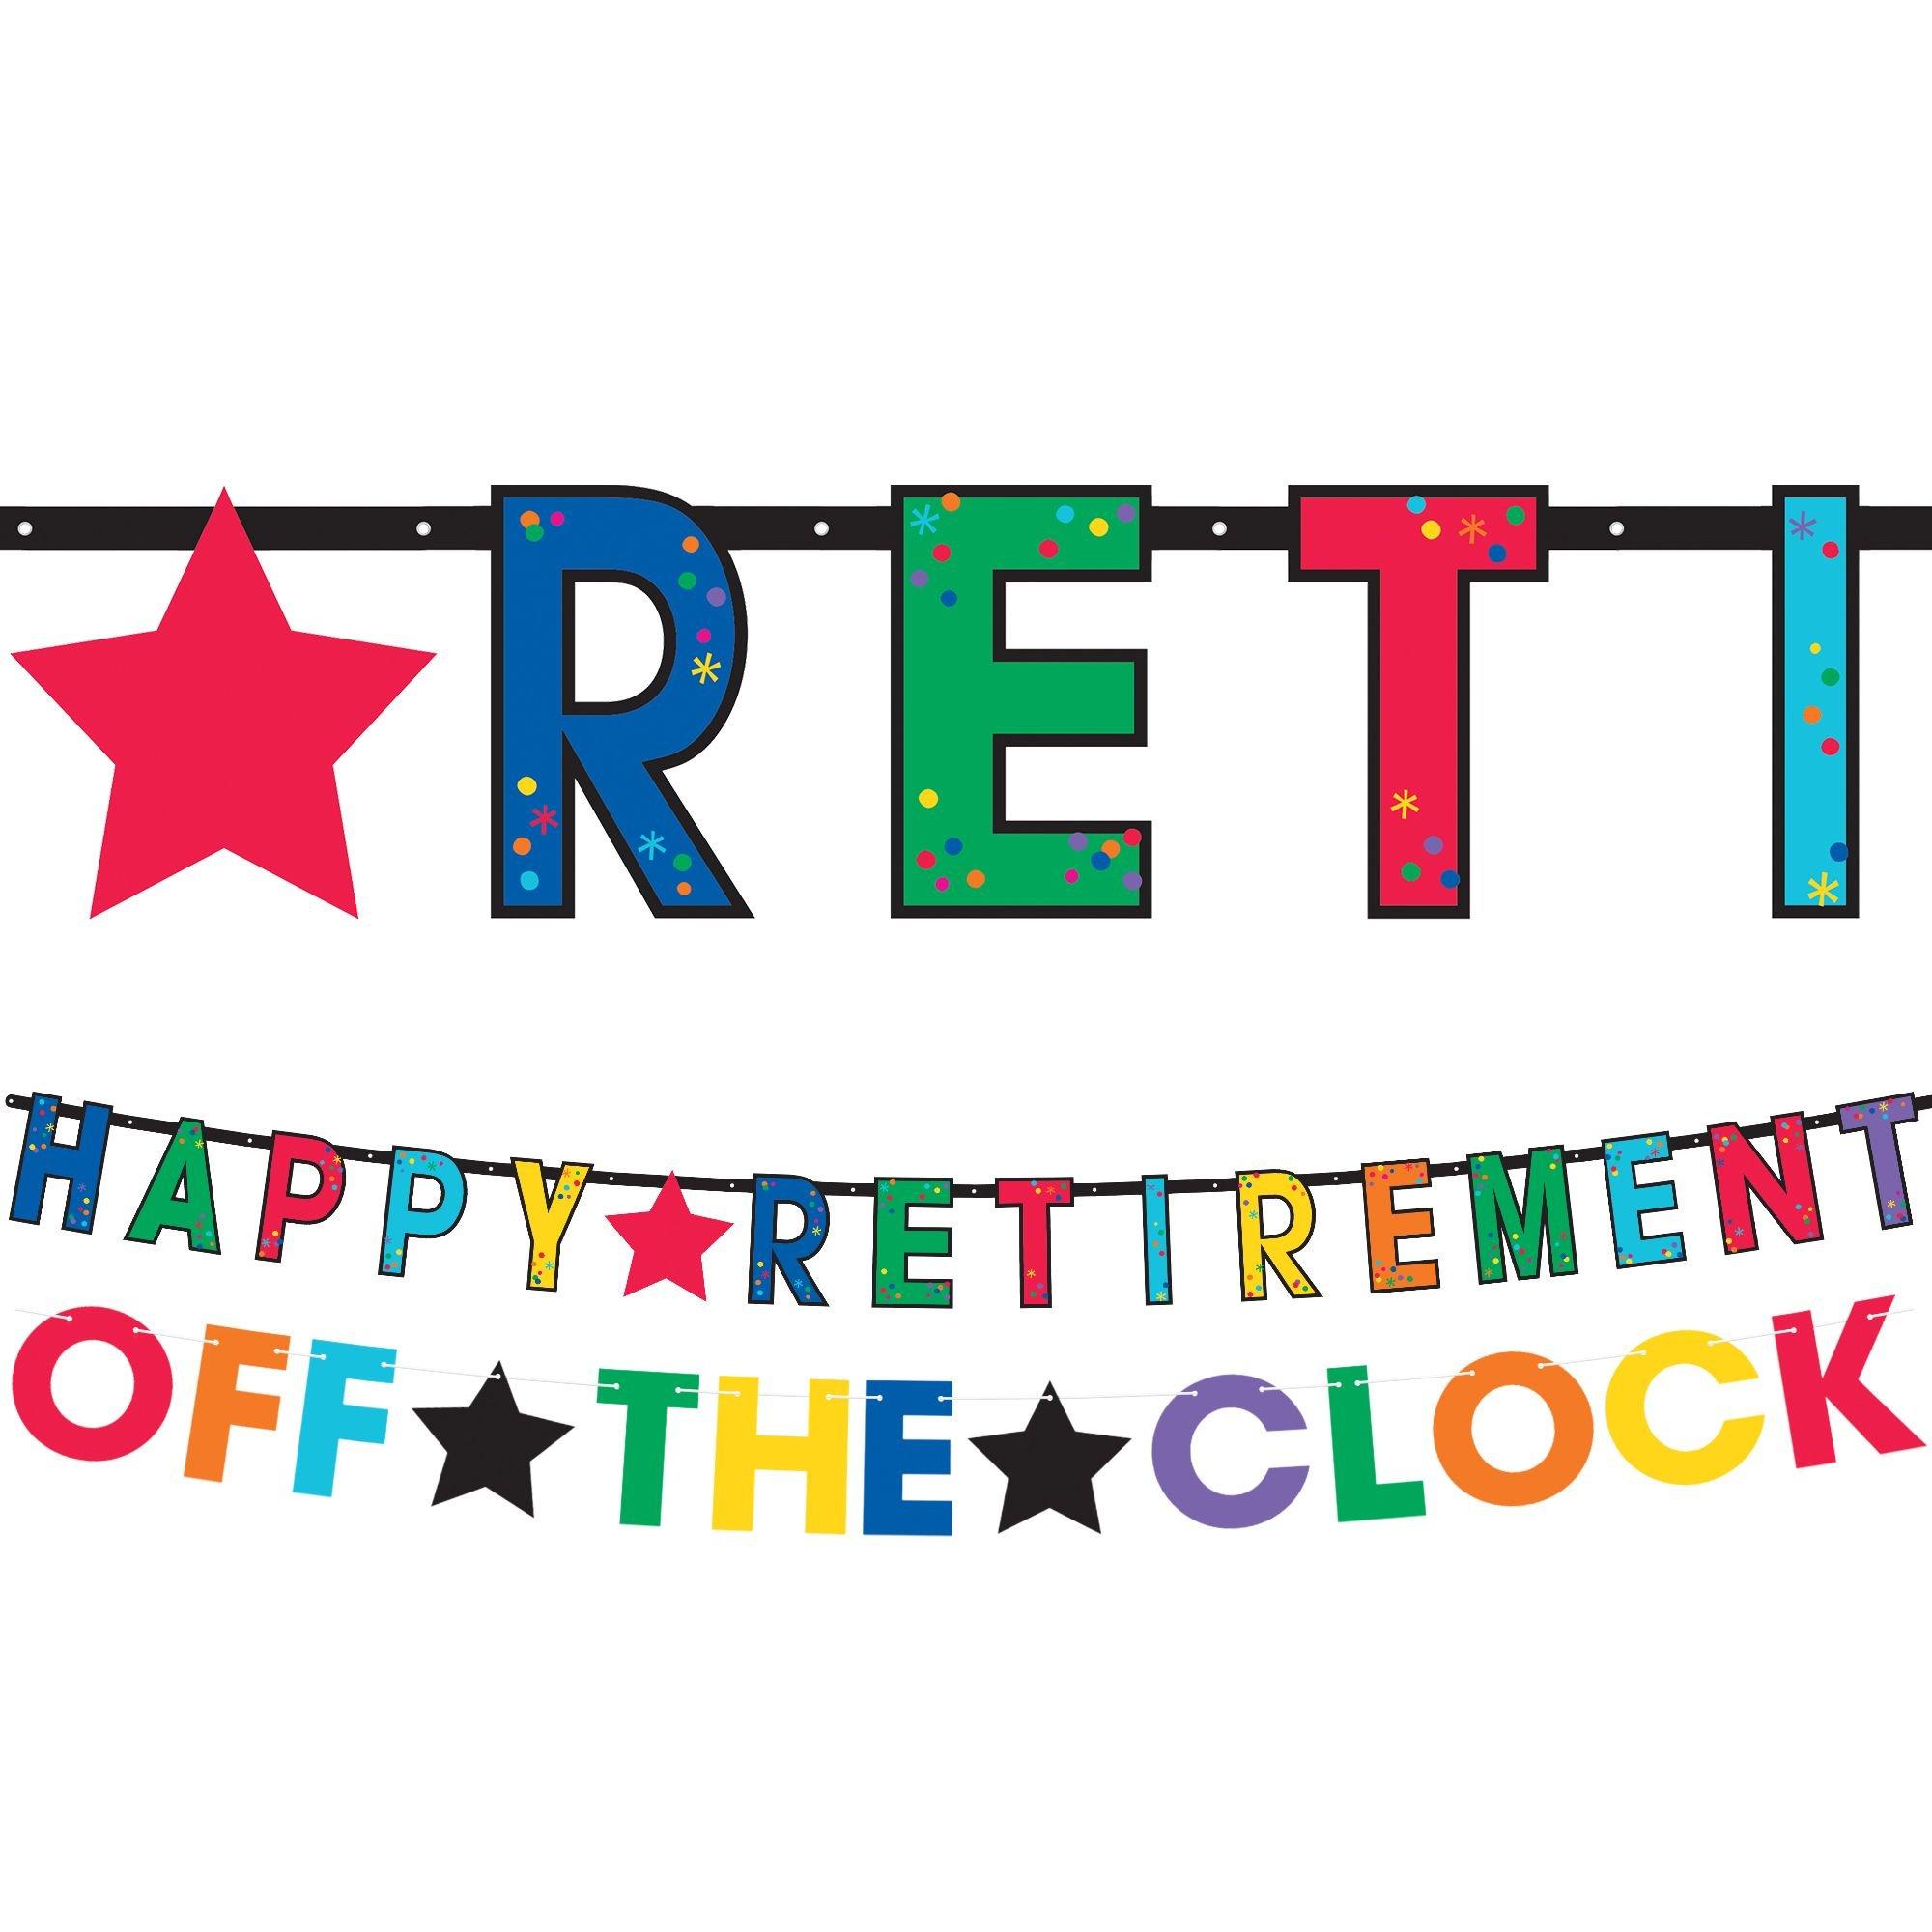 Happy Retirement Cardstock Letter Banner Set, 2pc - Officially Retired